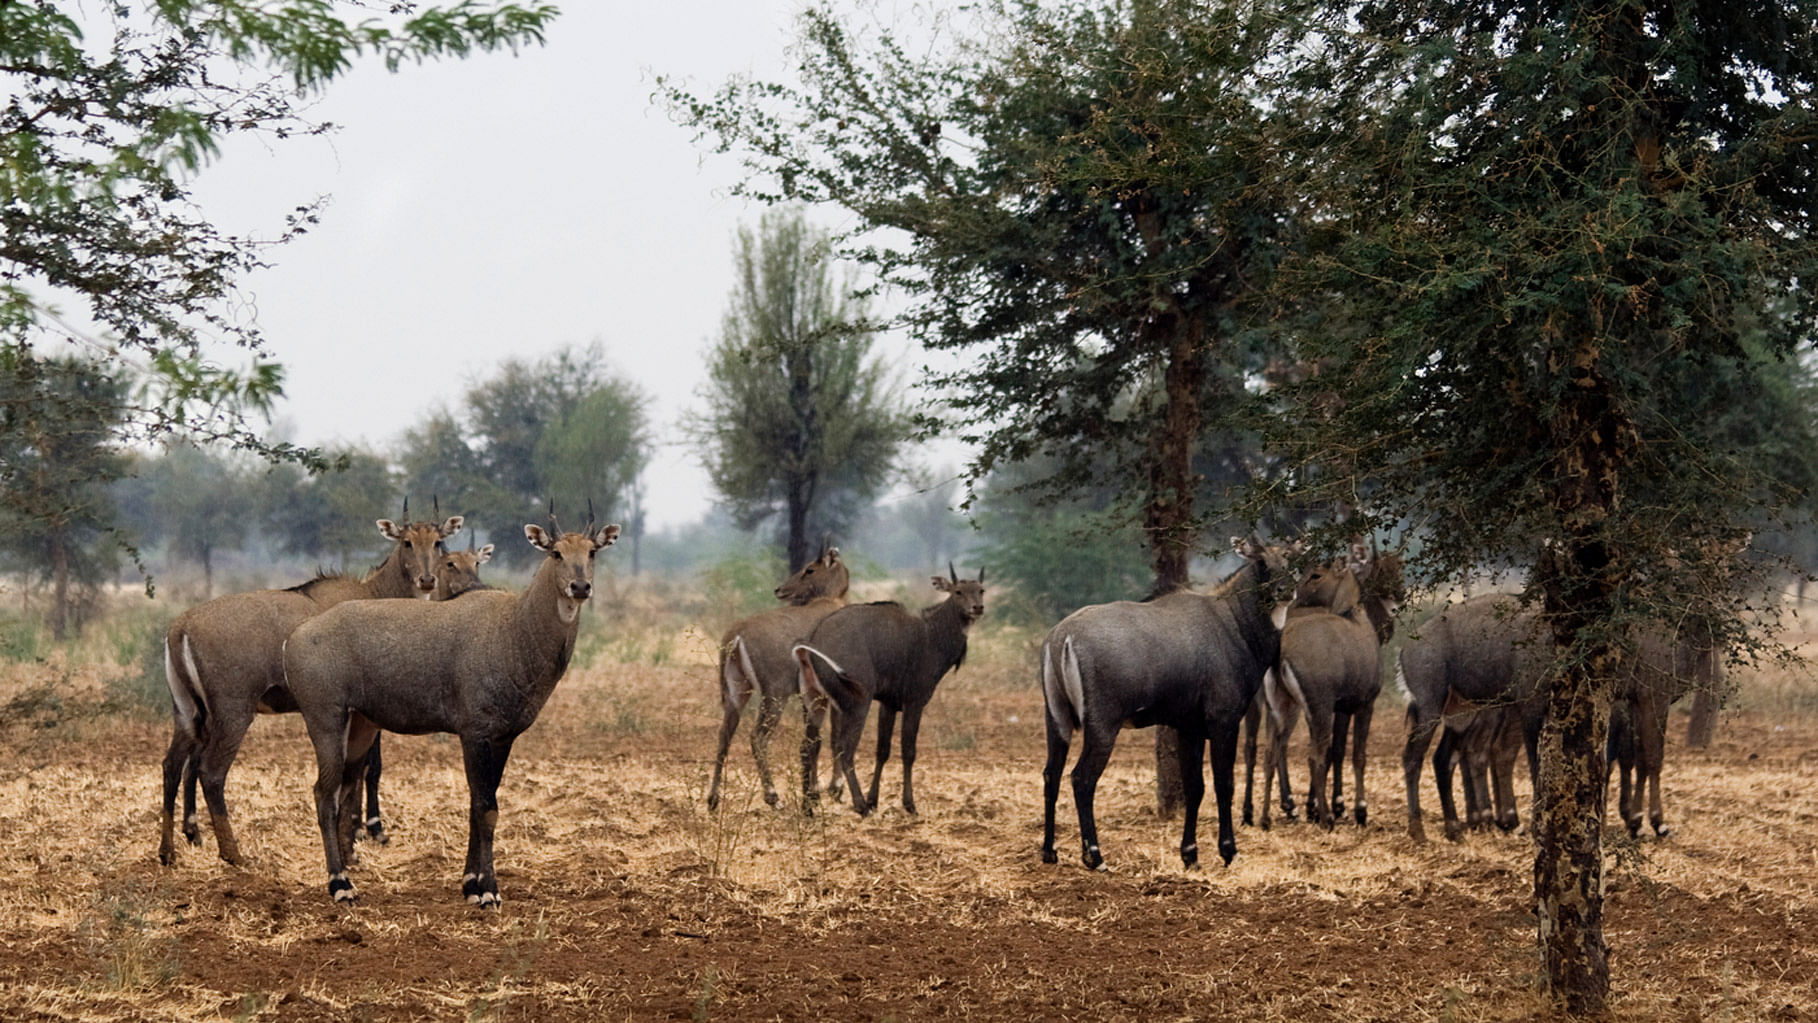 About 200 Nilgai or Blue Bulls were shot dead in Bihar. (Photo: iStockphoto)